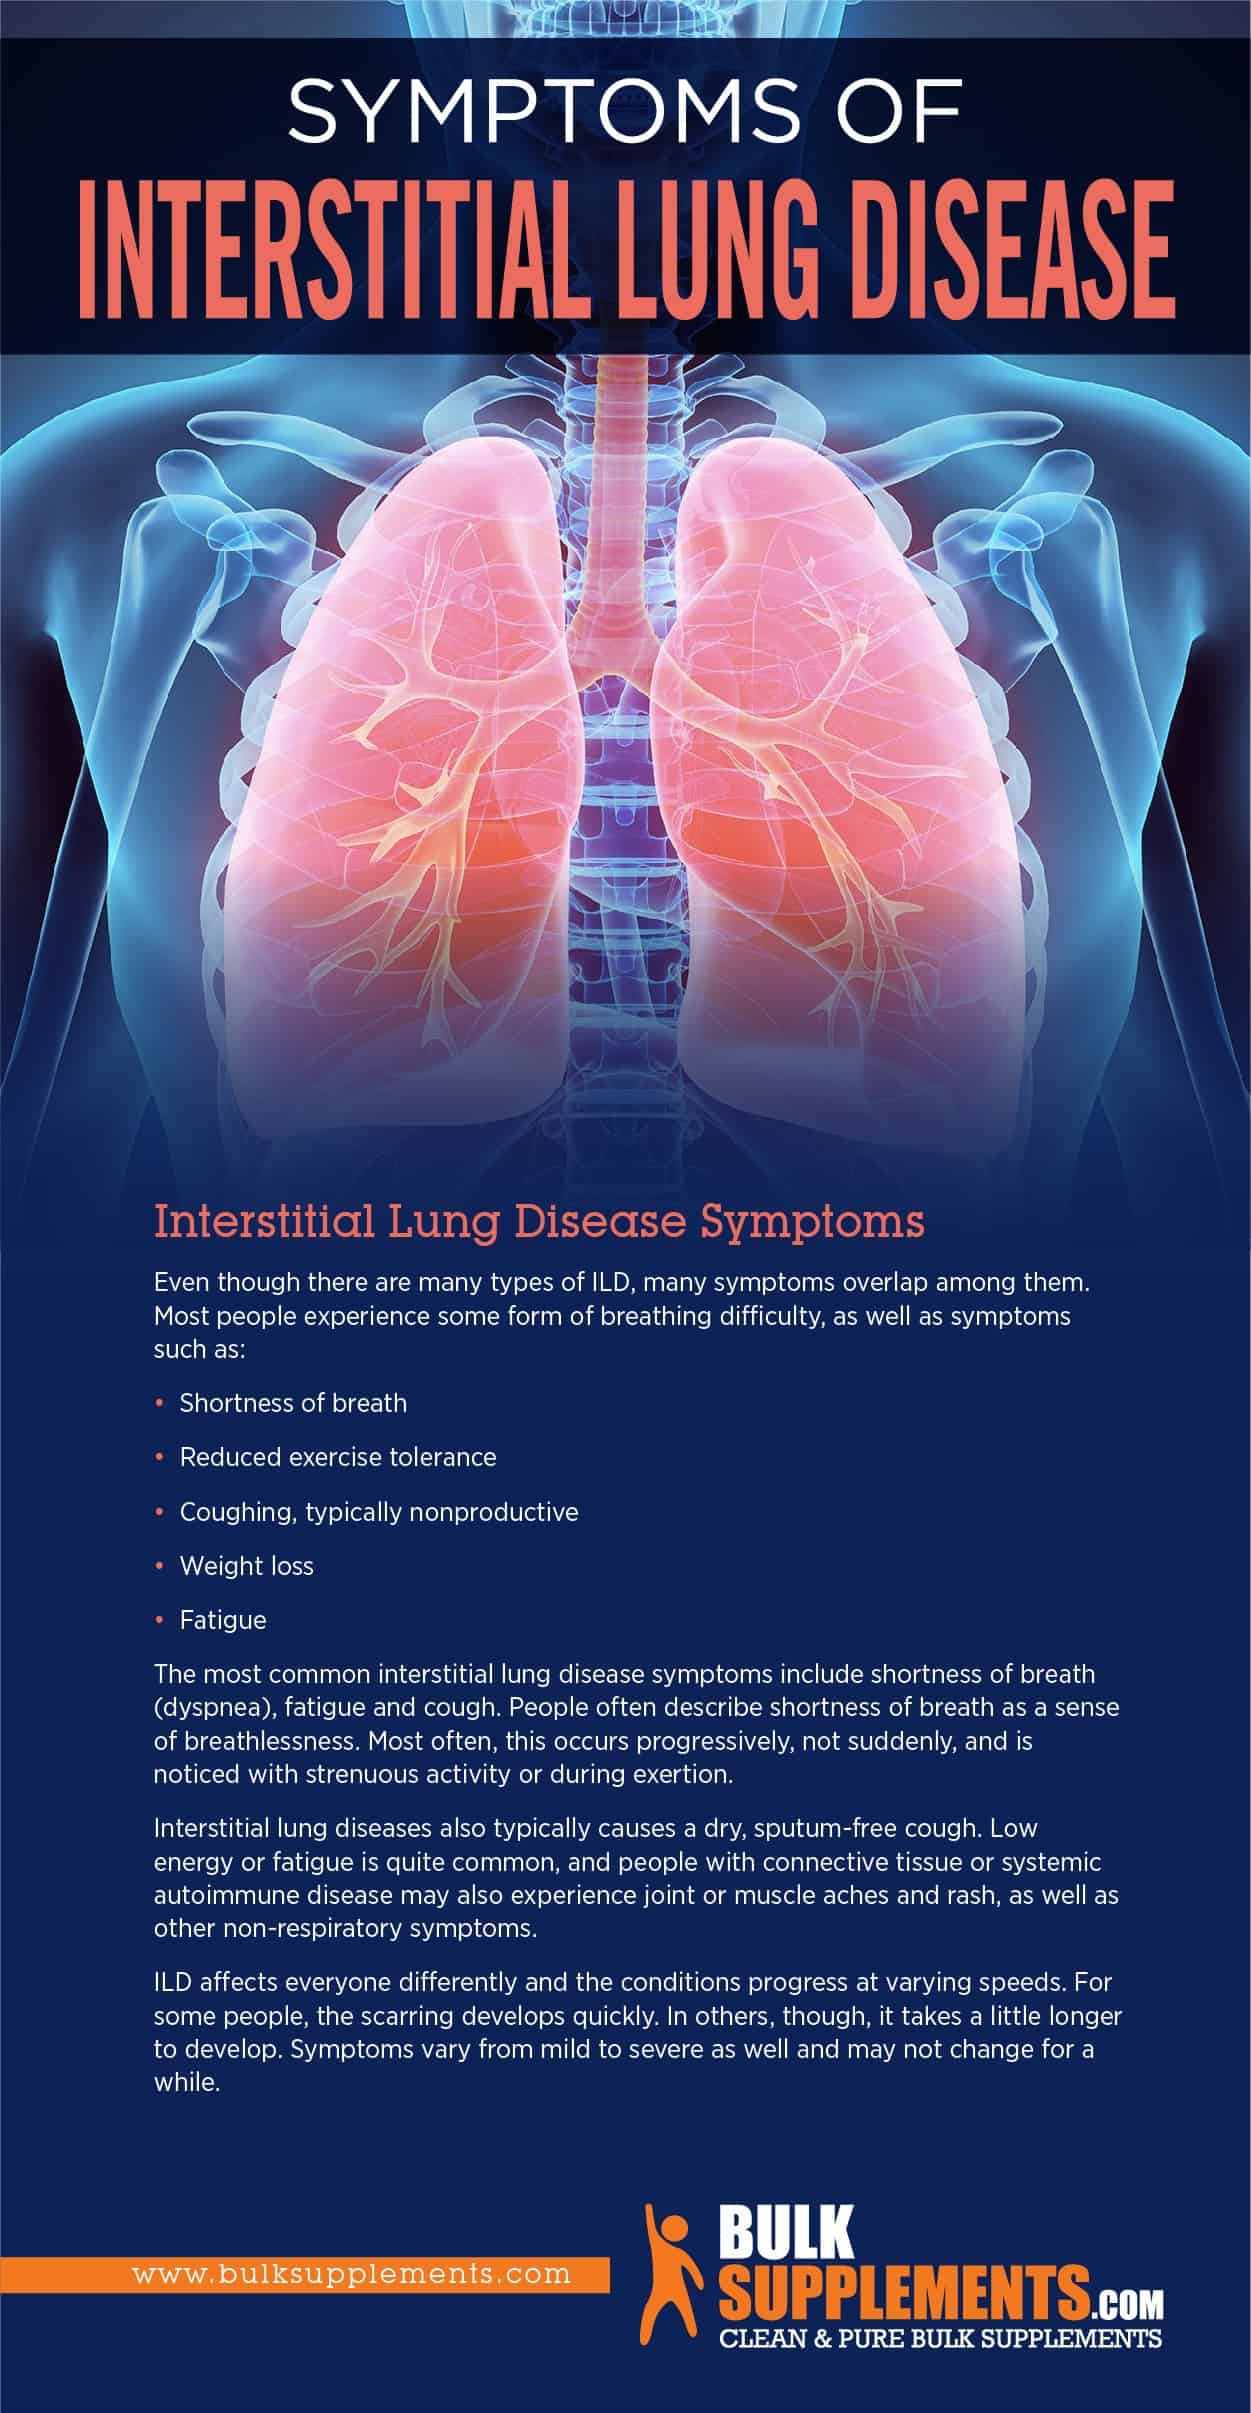 Interstitial Lung Disease Symptoms